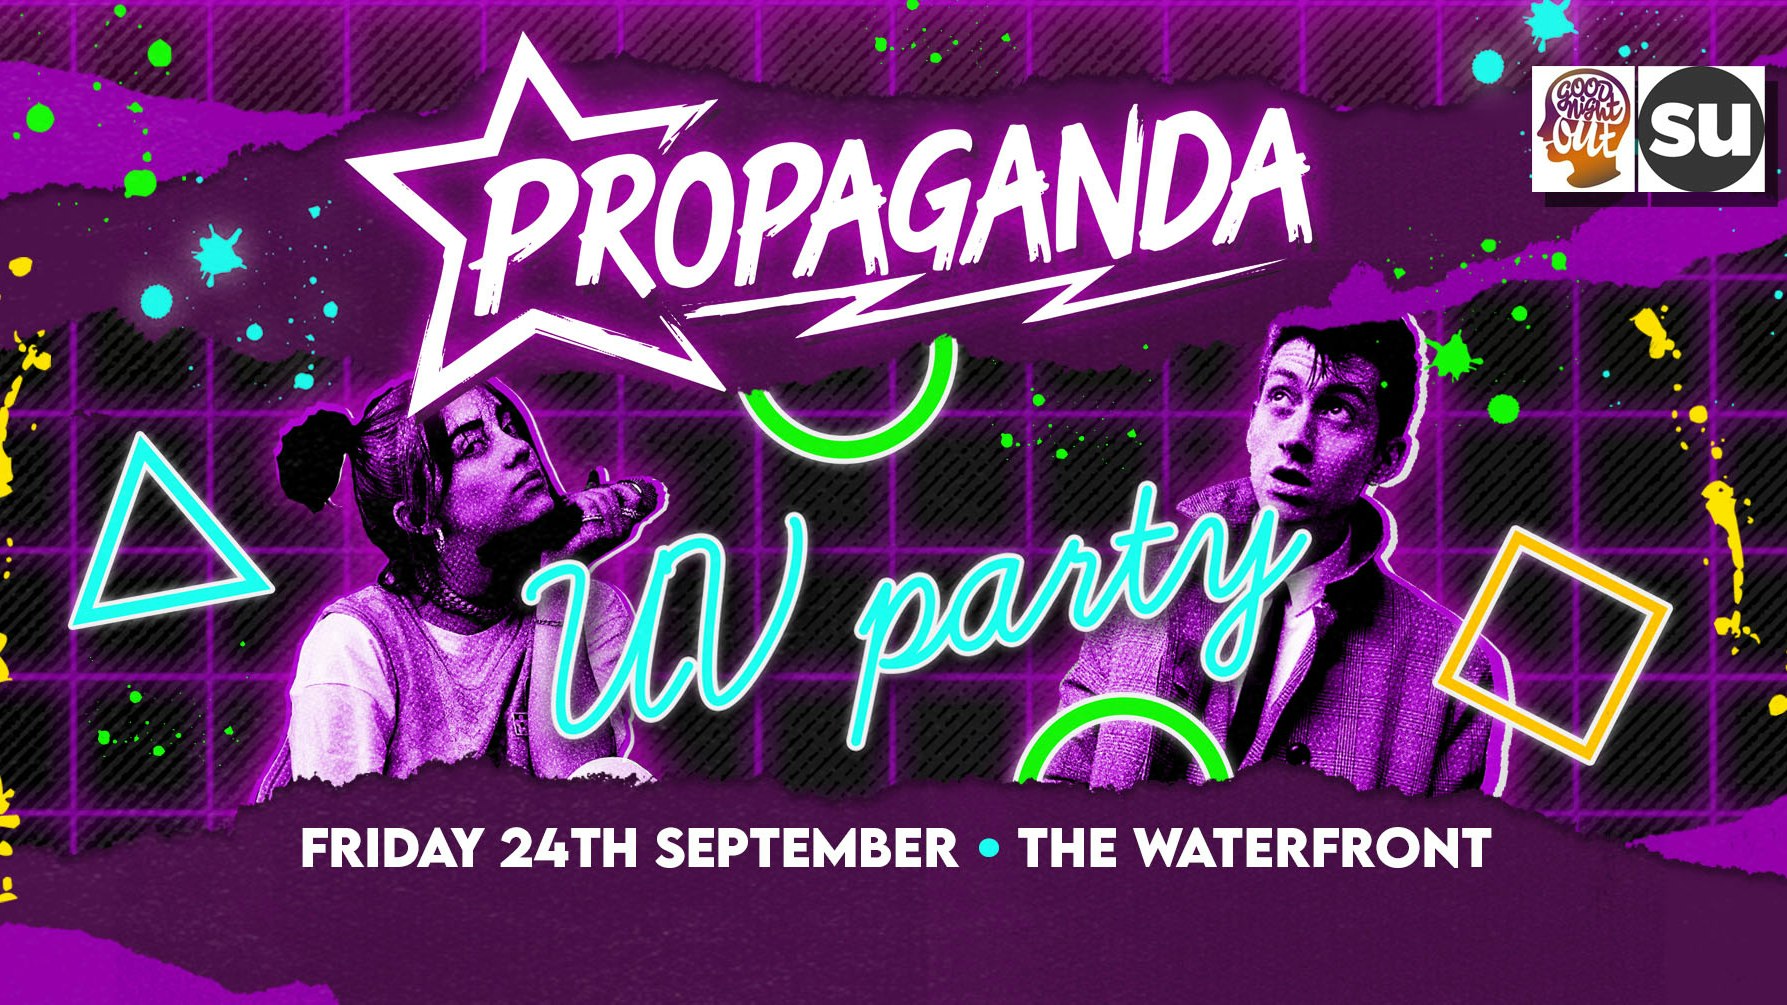 Propaganda Norwich – UV Party!